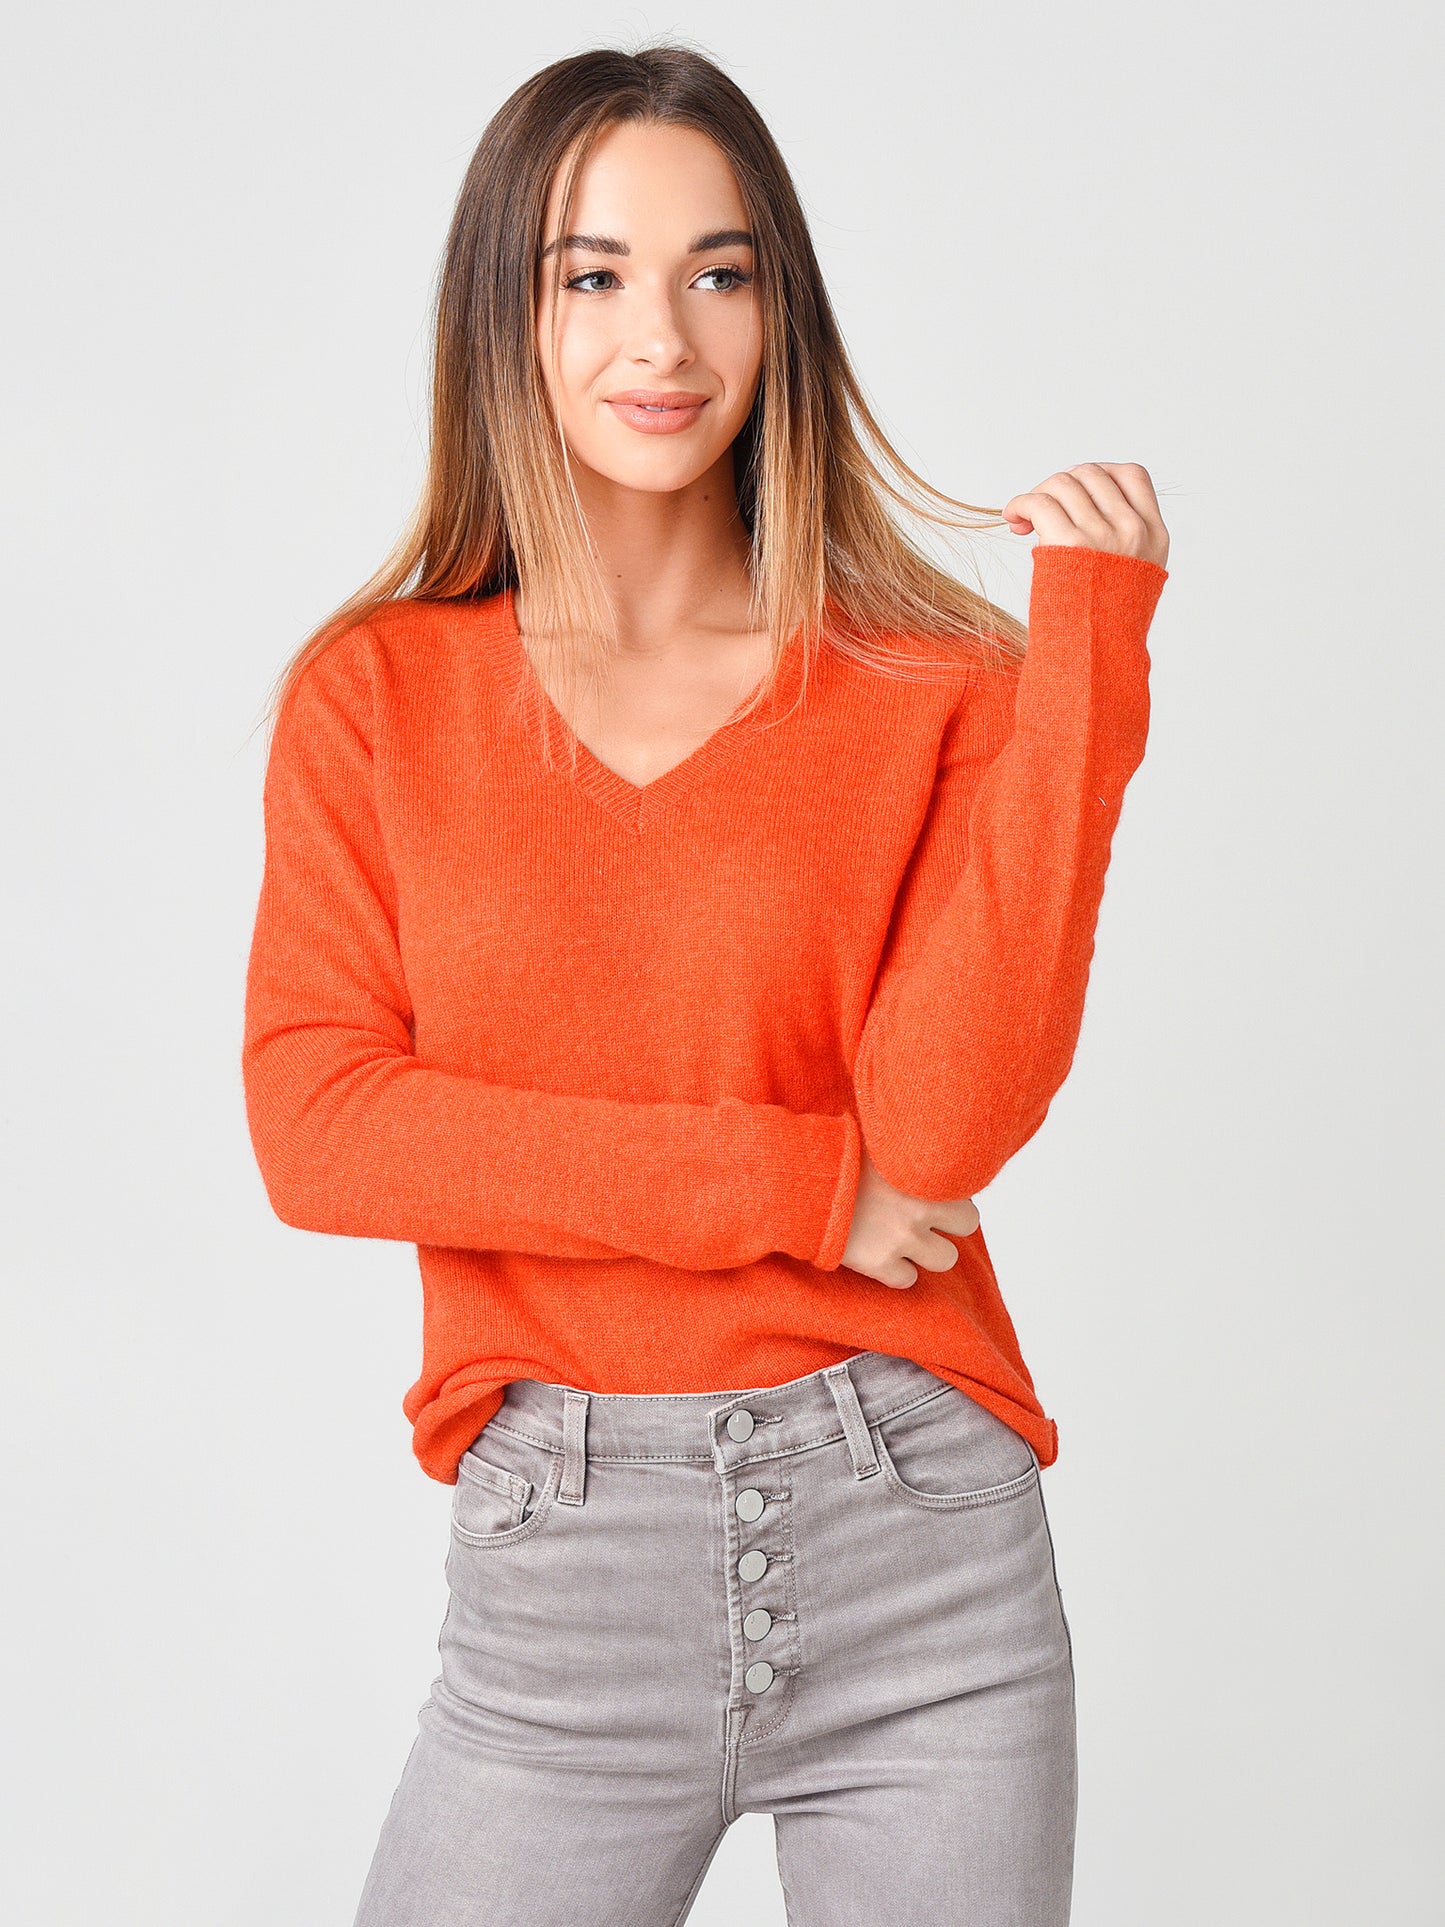 ATM Women's Cashmere V-Neck Sweater